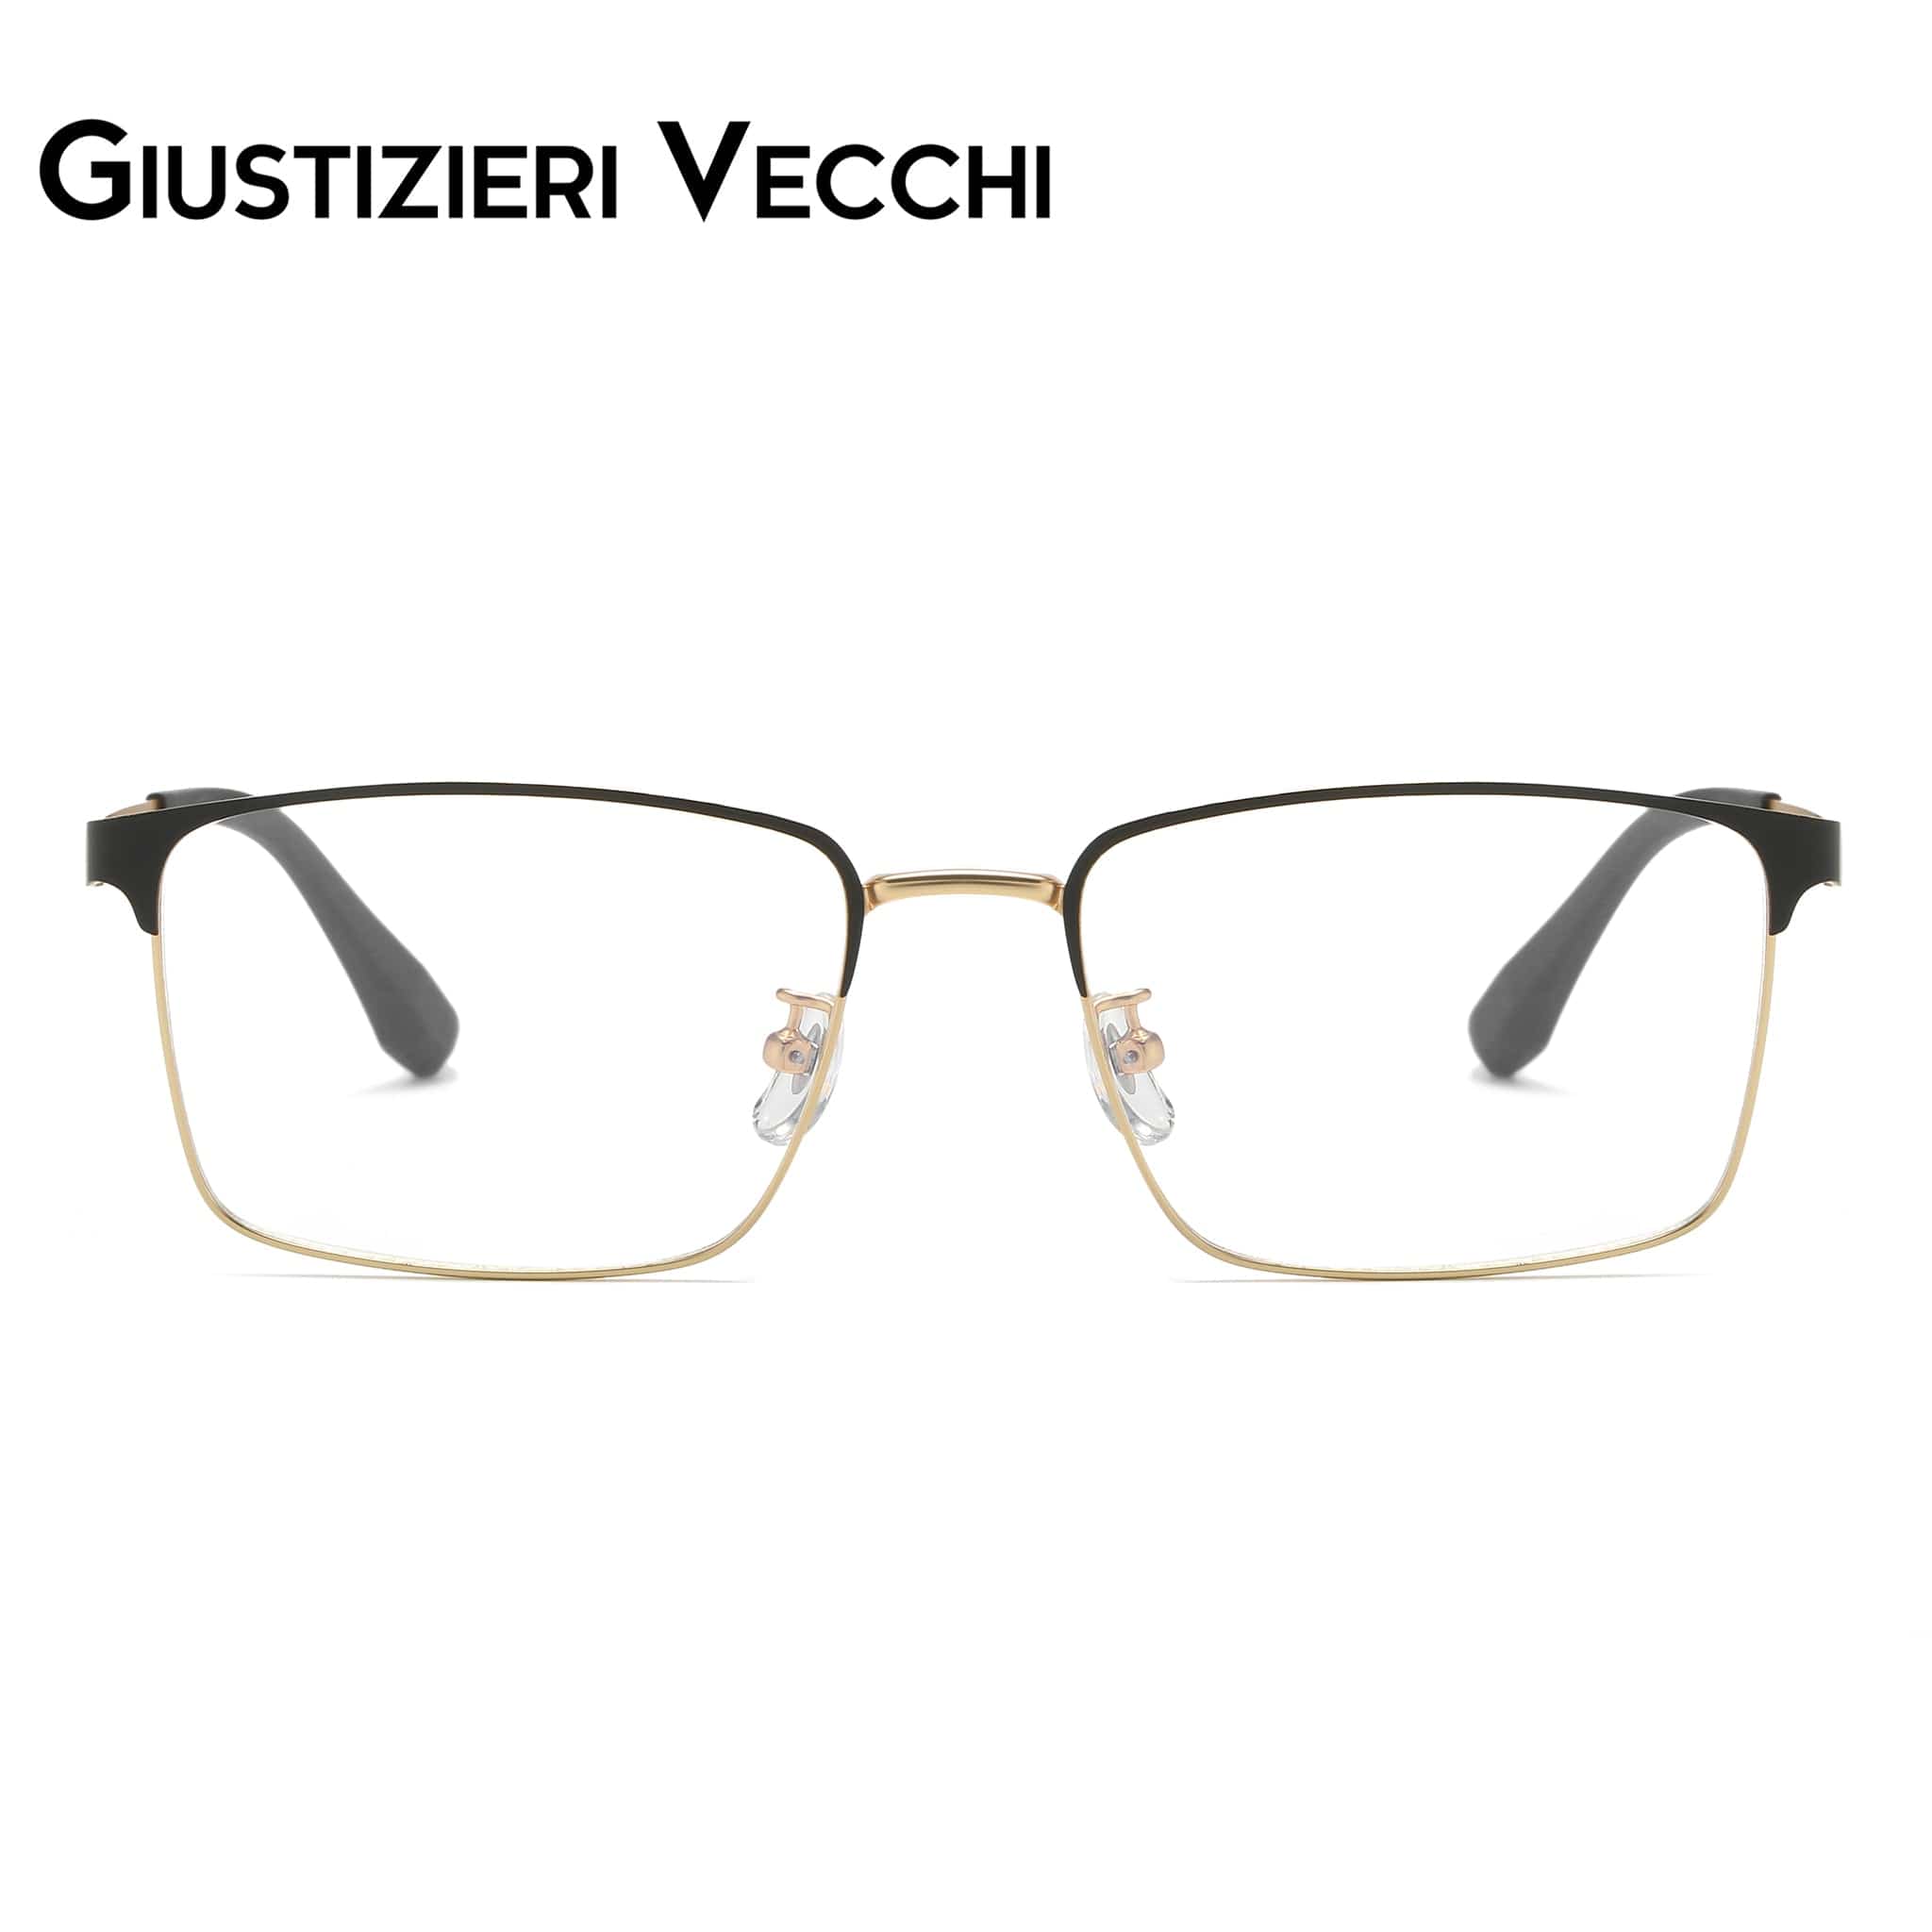 GIUSTIZIERI VECCHI Eyeglasses Large / Black with Gold SkyRider Duo